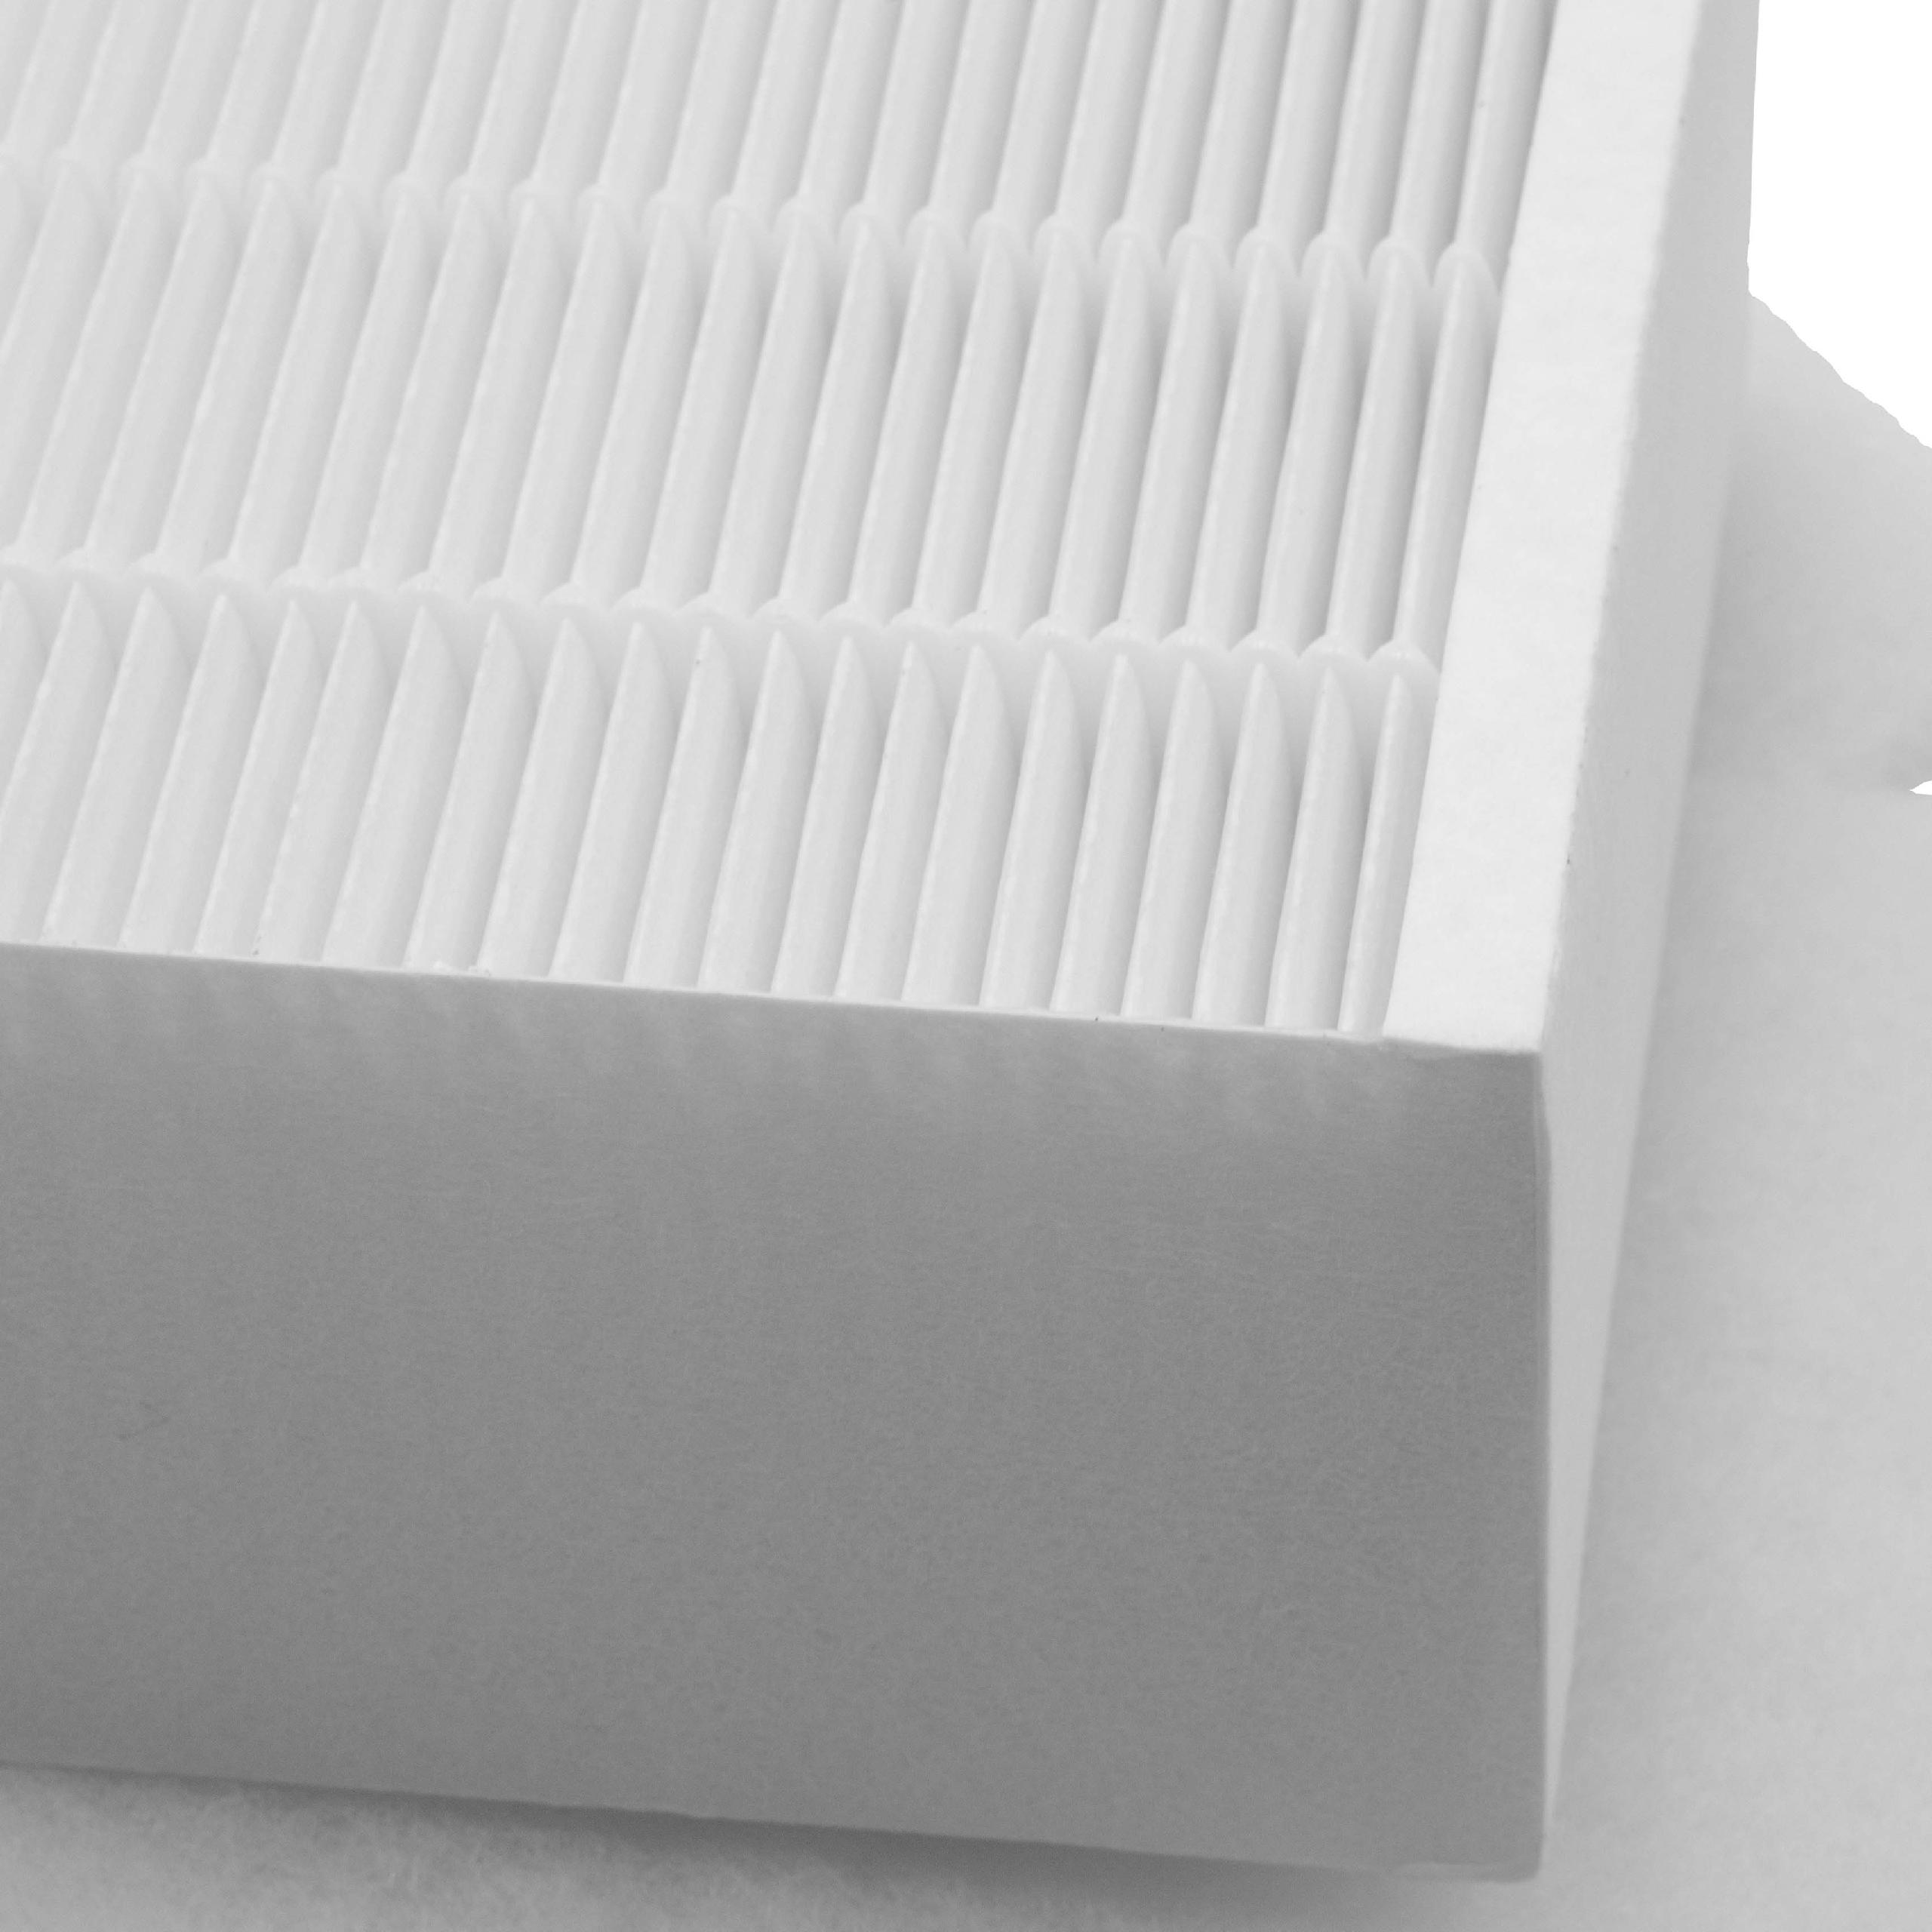 3 Part Filter Set replaces Vallox 27, 2505 forAir Purifier - coarse dust filter, fine dust filter